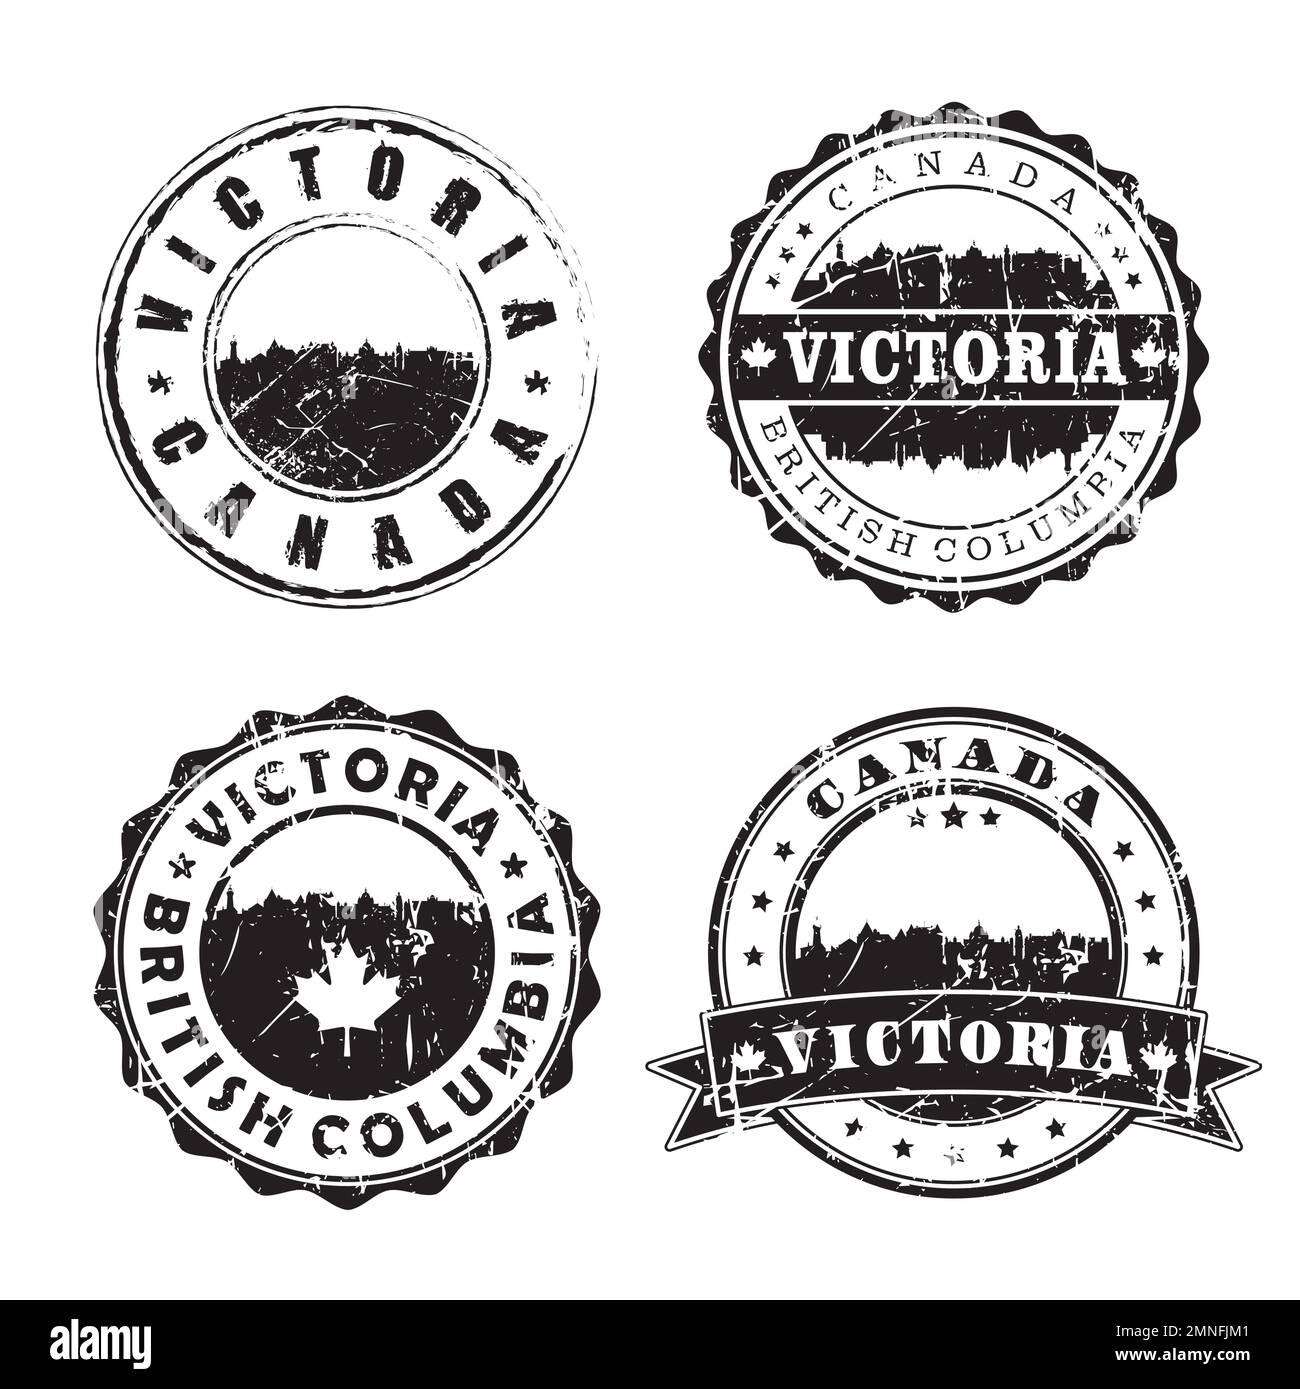 Victoria British Columbia Stamp marque de poste Skyline. Passeport postal Silhouette. Jeu d'icônes City Round Vector. Postage vintage Illustration de Vecteur